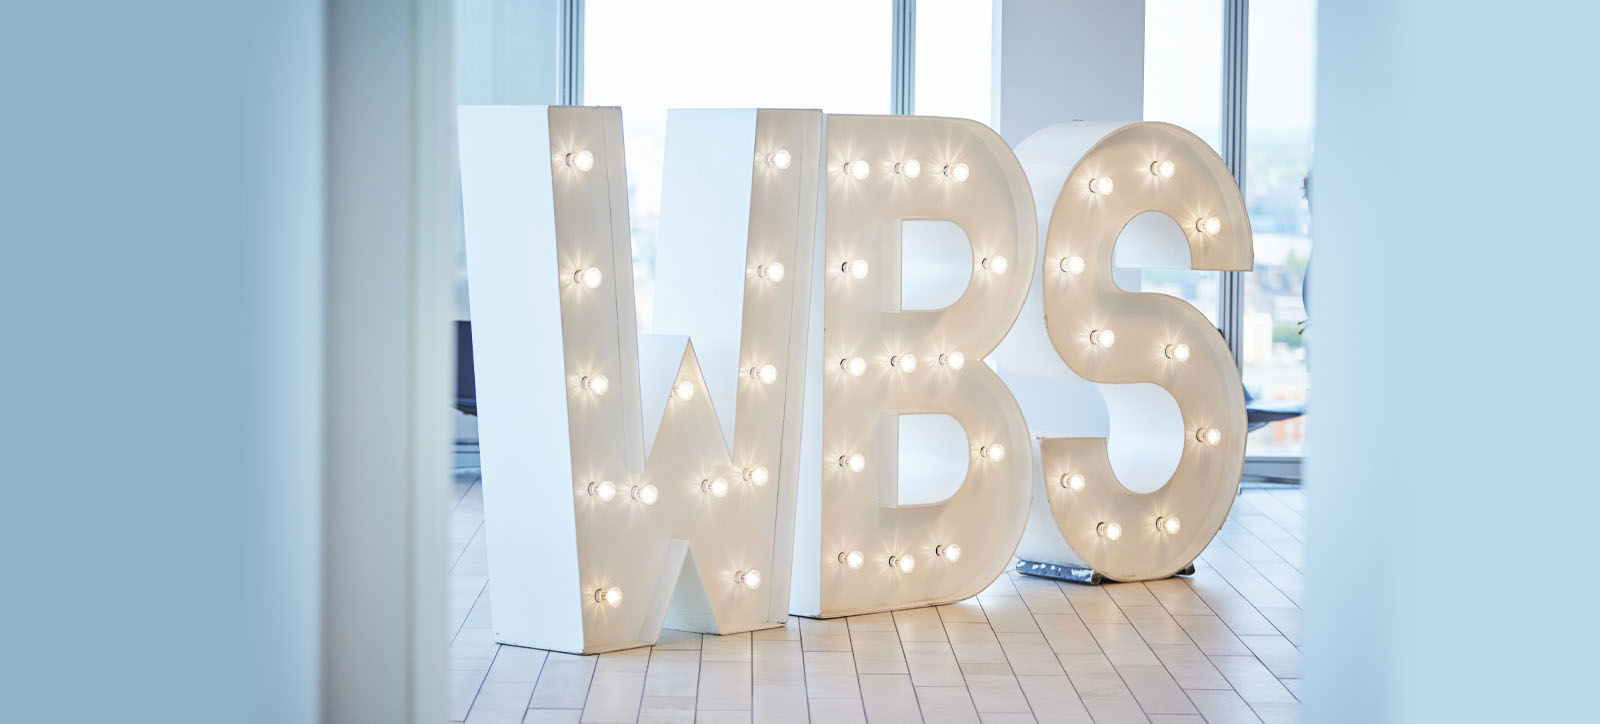 WBS Foundation Year